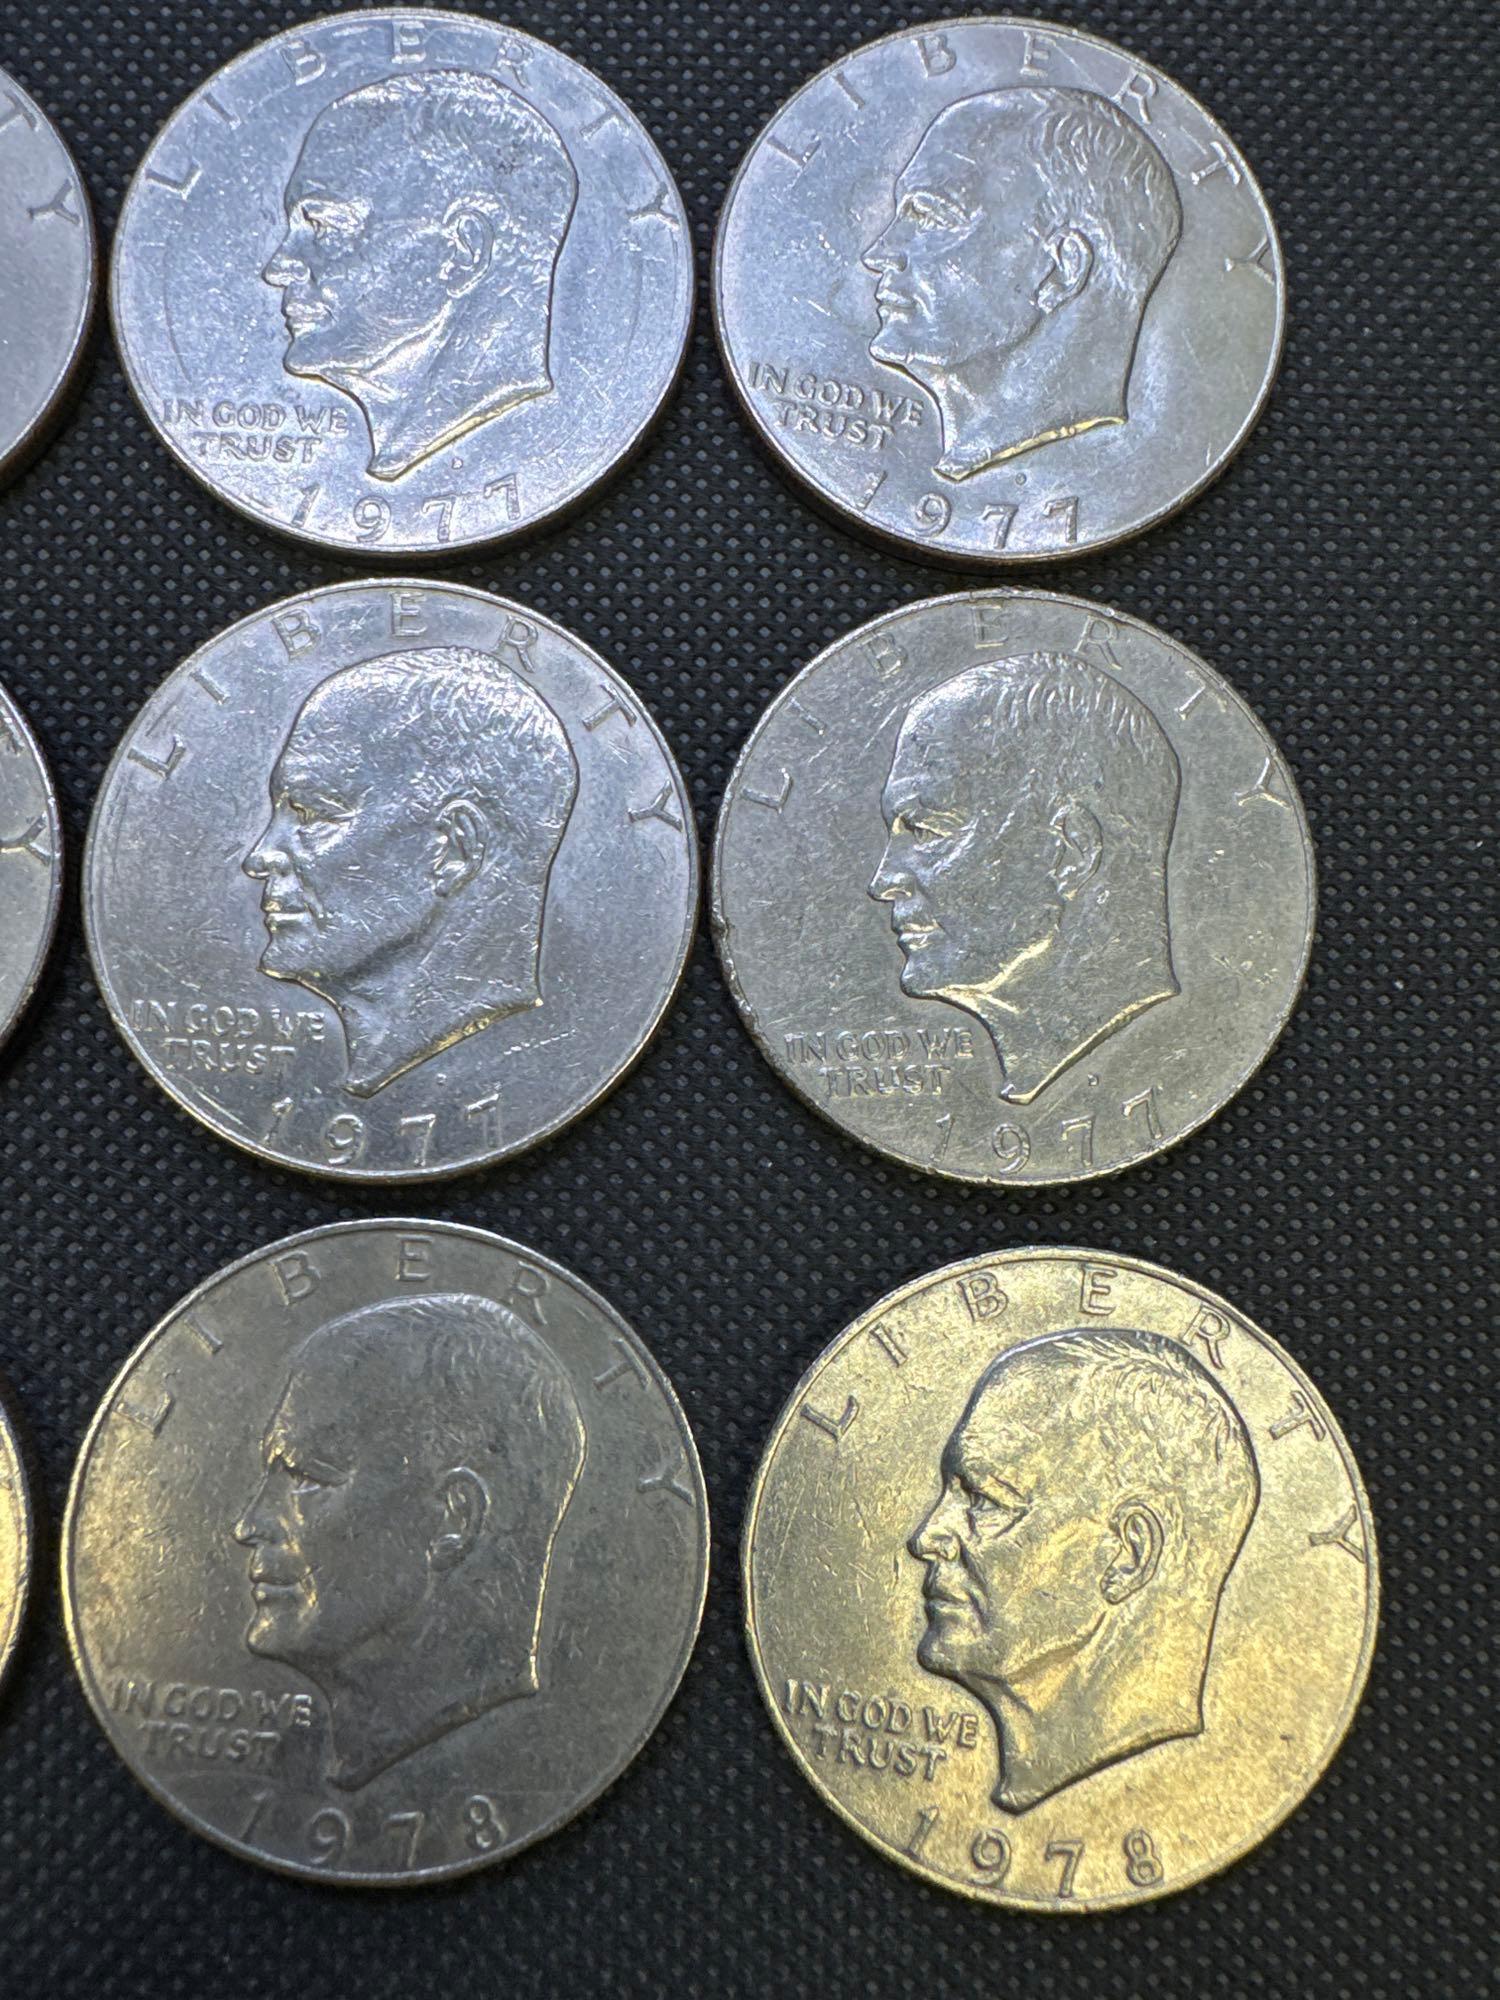 12 Eisenhower Dollar Coins 1977-1978 272.0 Grams